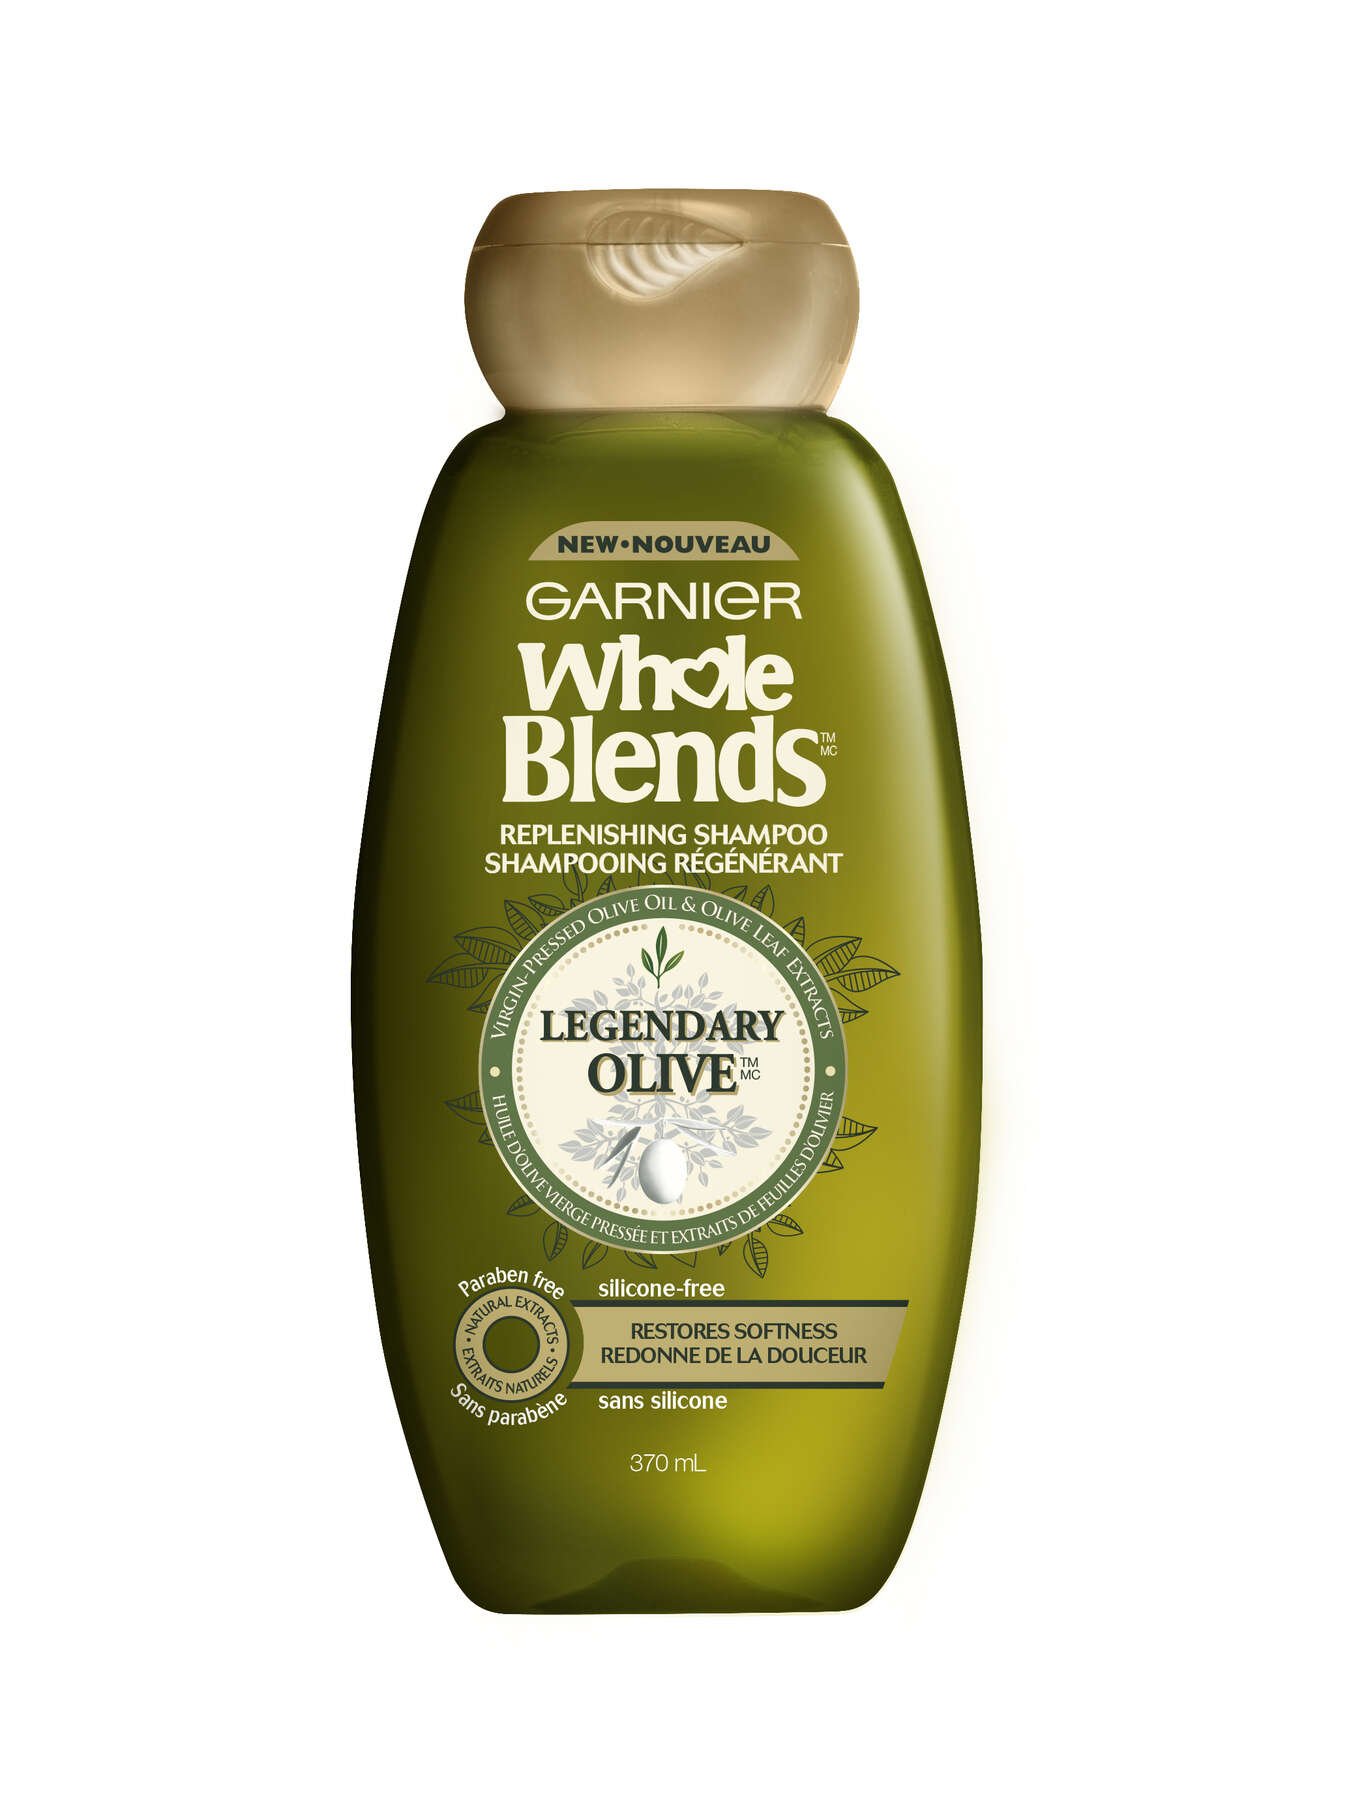 garnier shampoo whole blends legendary olive shampoo siliconefree 370 ml 603084494545 t1